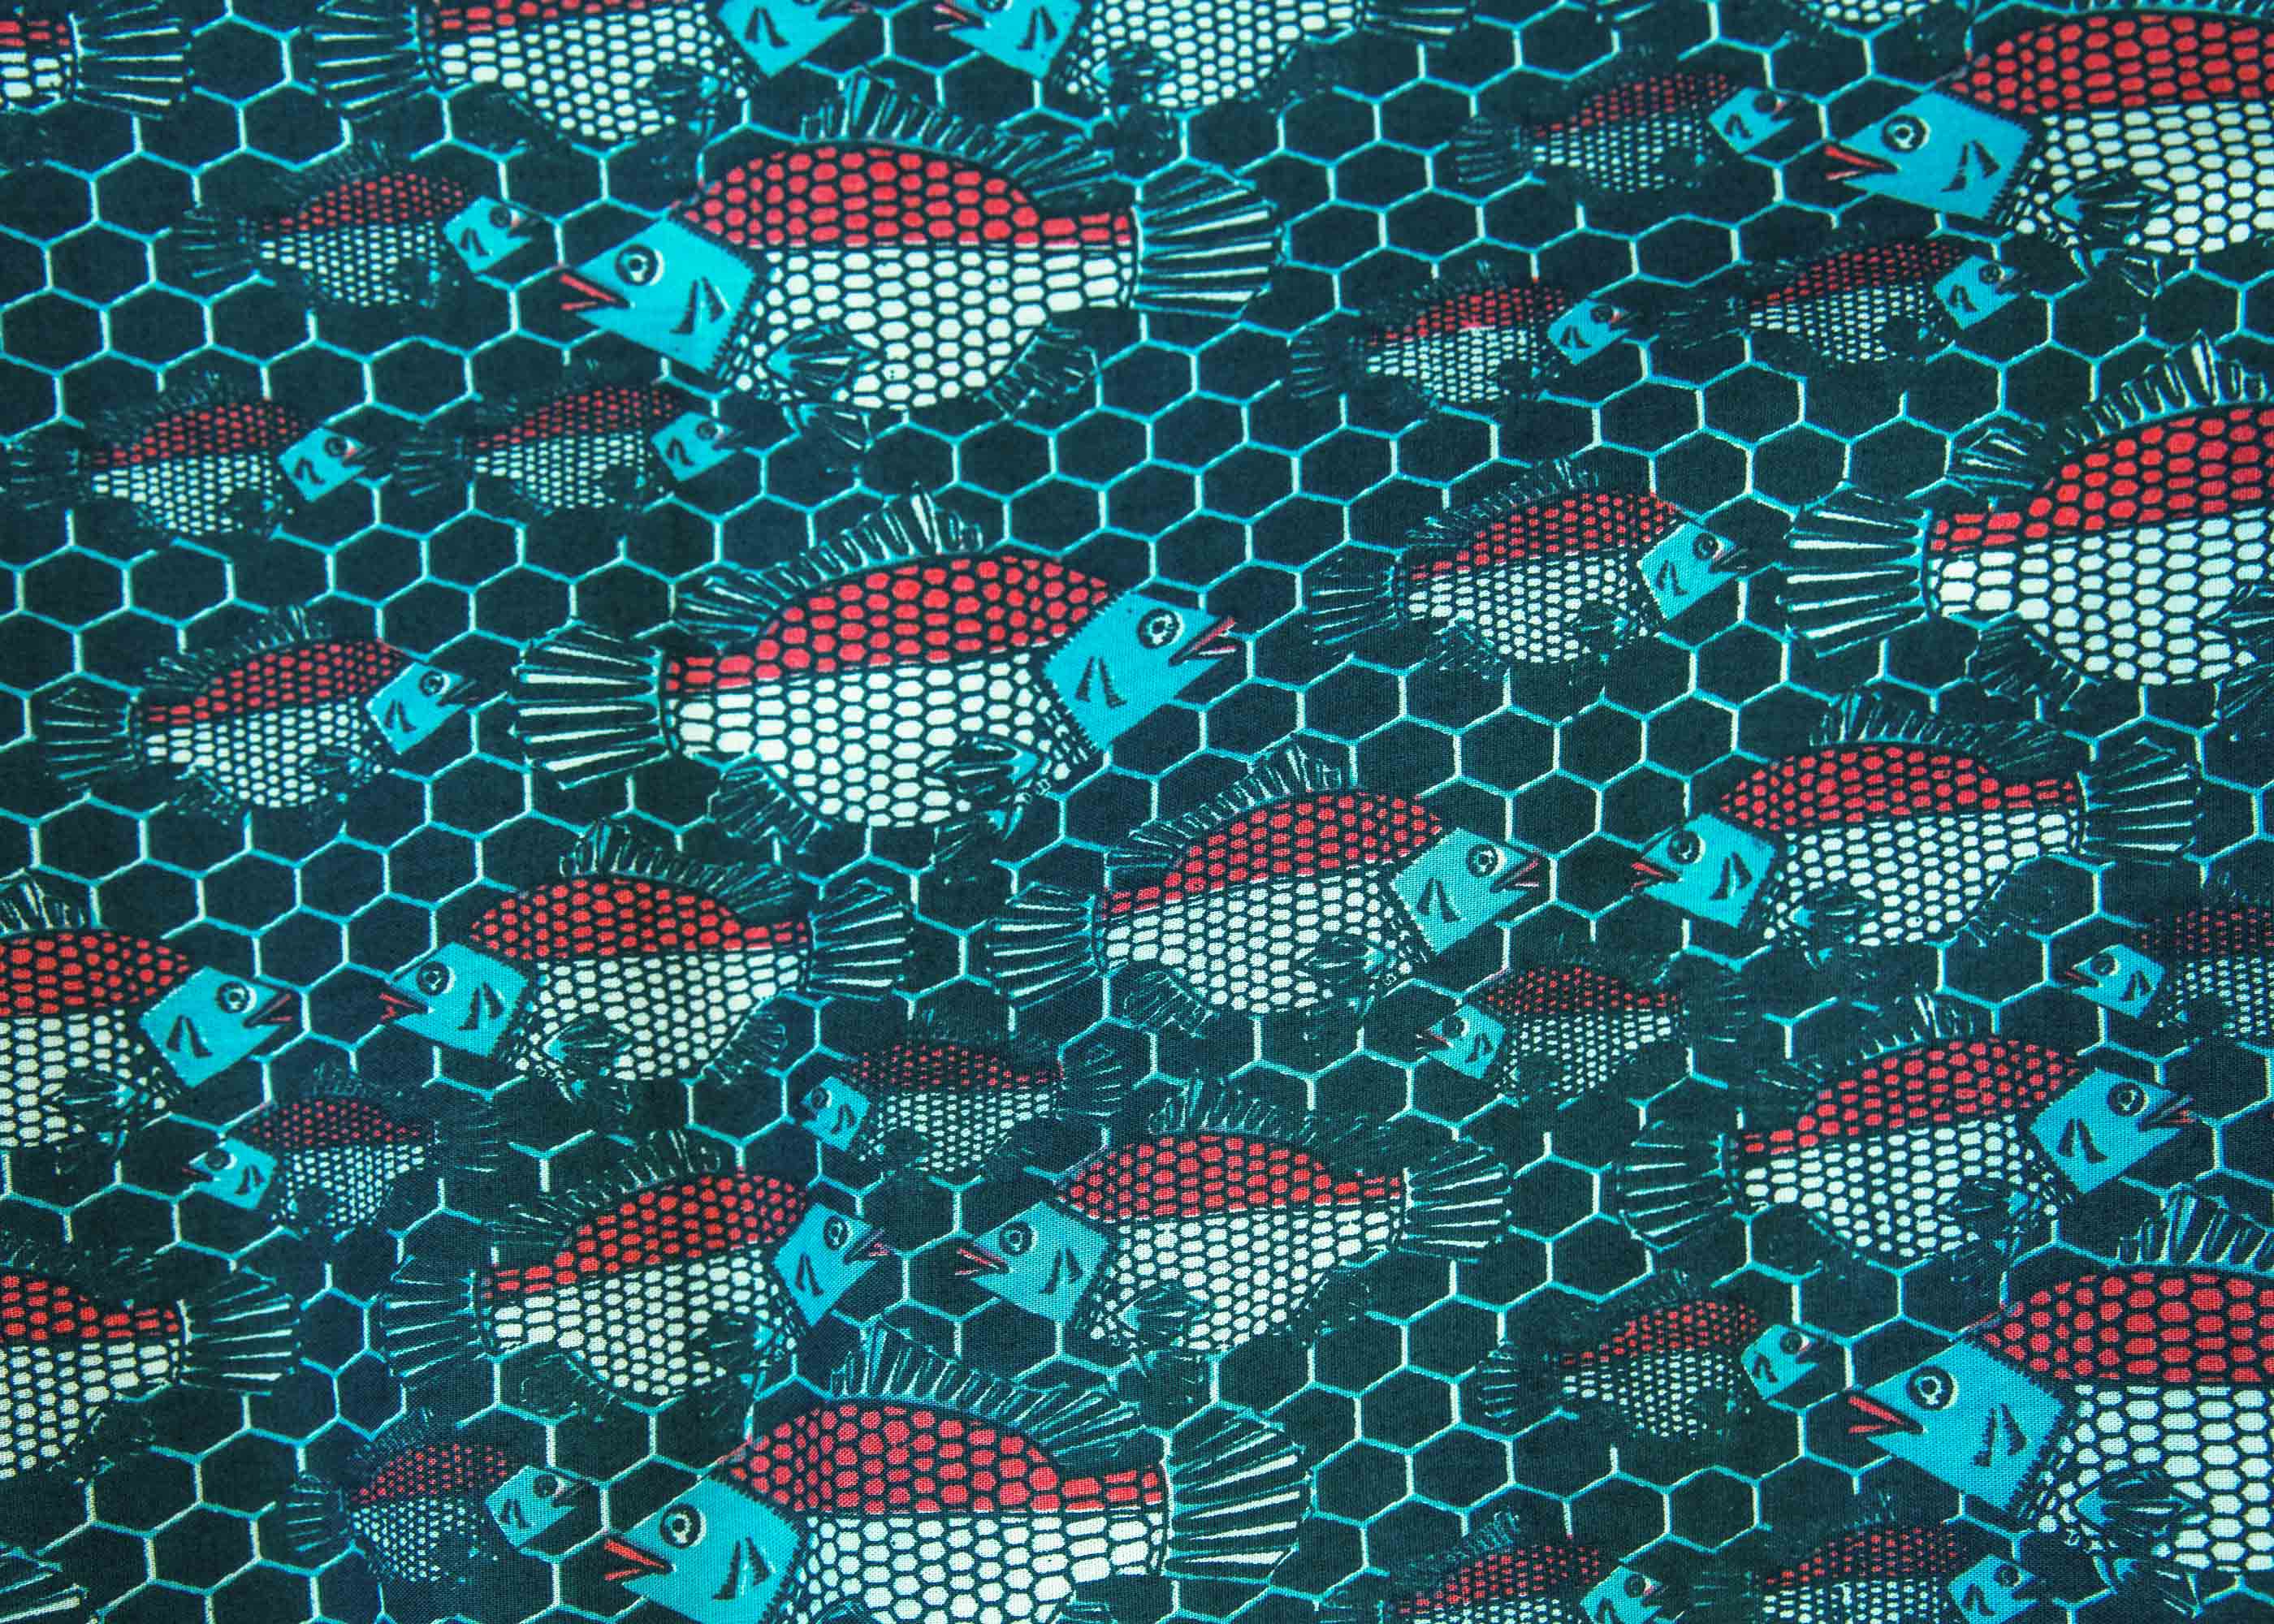 Display of a fish design shirt